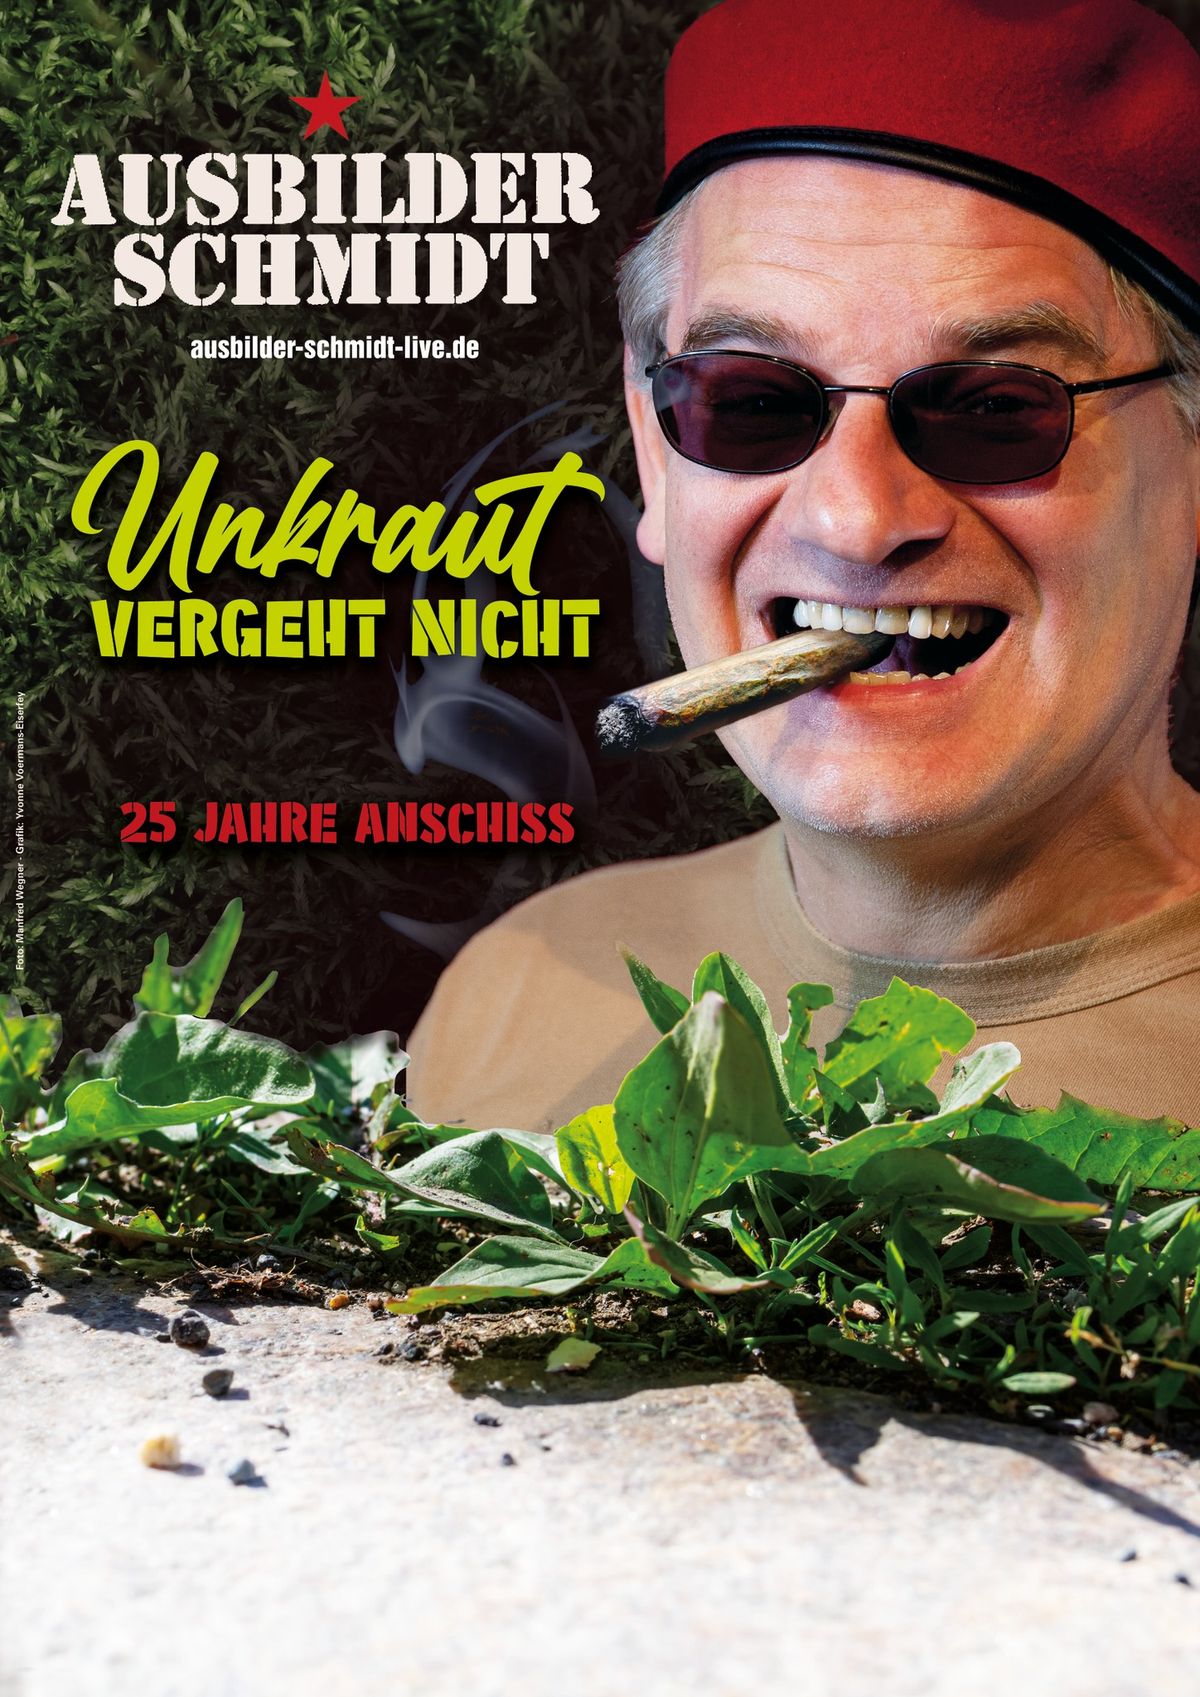 Ausbilder Schmidt - Berlin